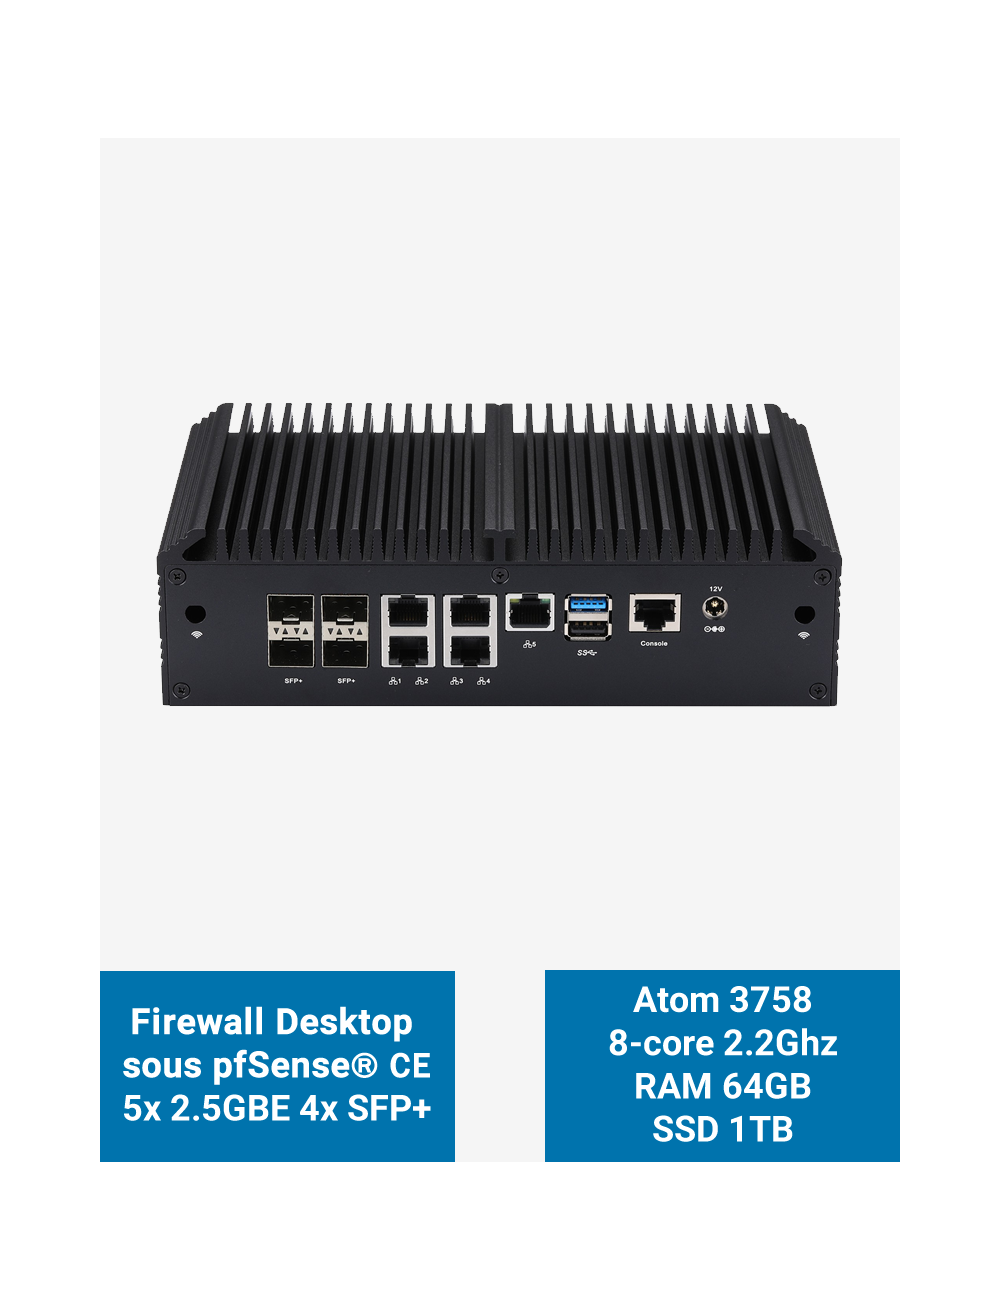 Firewall pfSense Q2x Celeron C3758 5x2.5G 4xSFP+ 64GB SSD 1TB